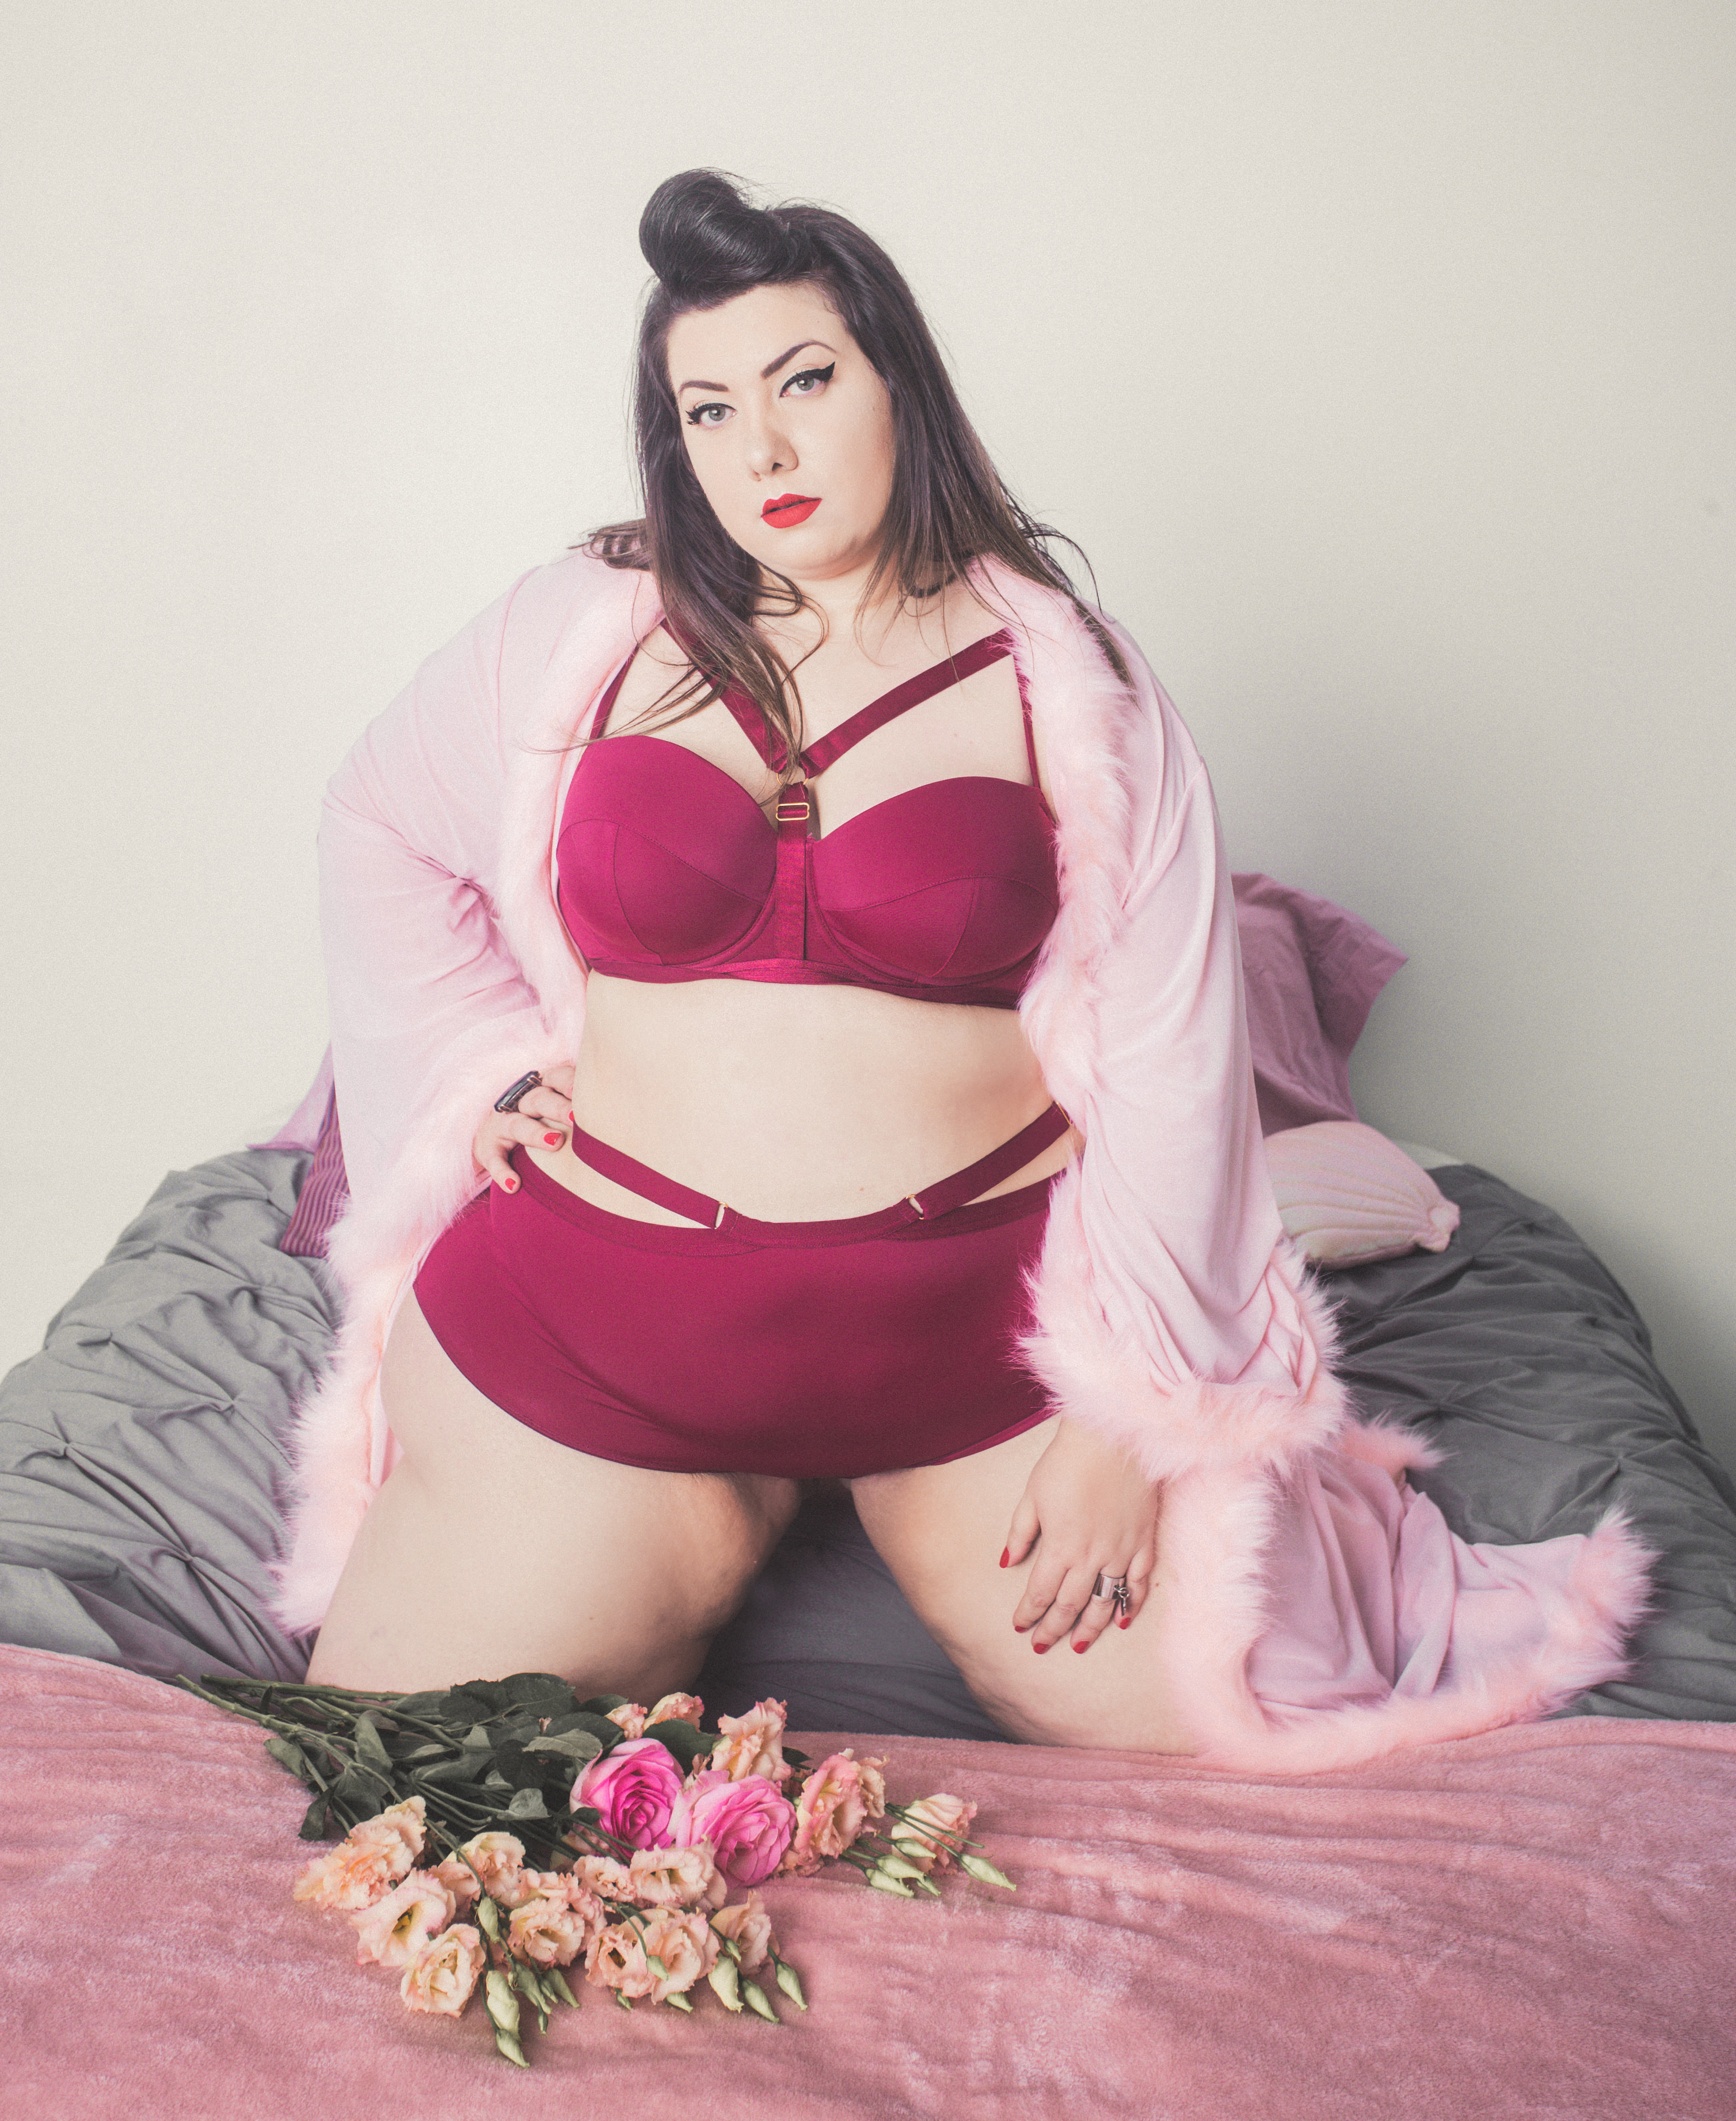 valentin playful promises gabi fresh lingerie sexy bbw fat curvy ronde grande taille plus size boudoir pin up booty